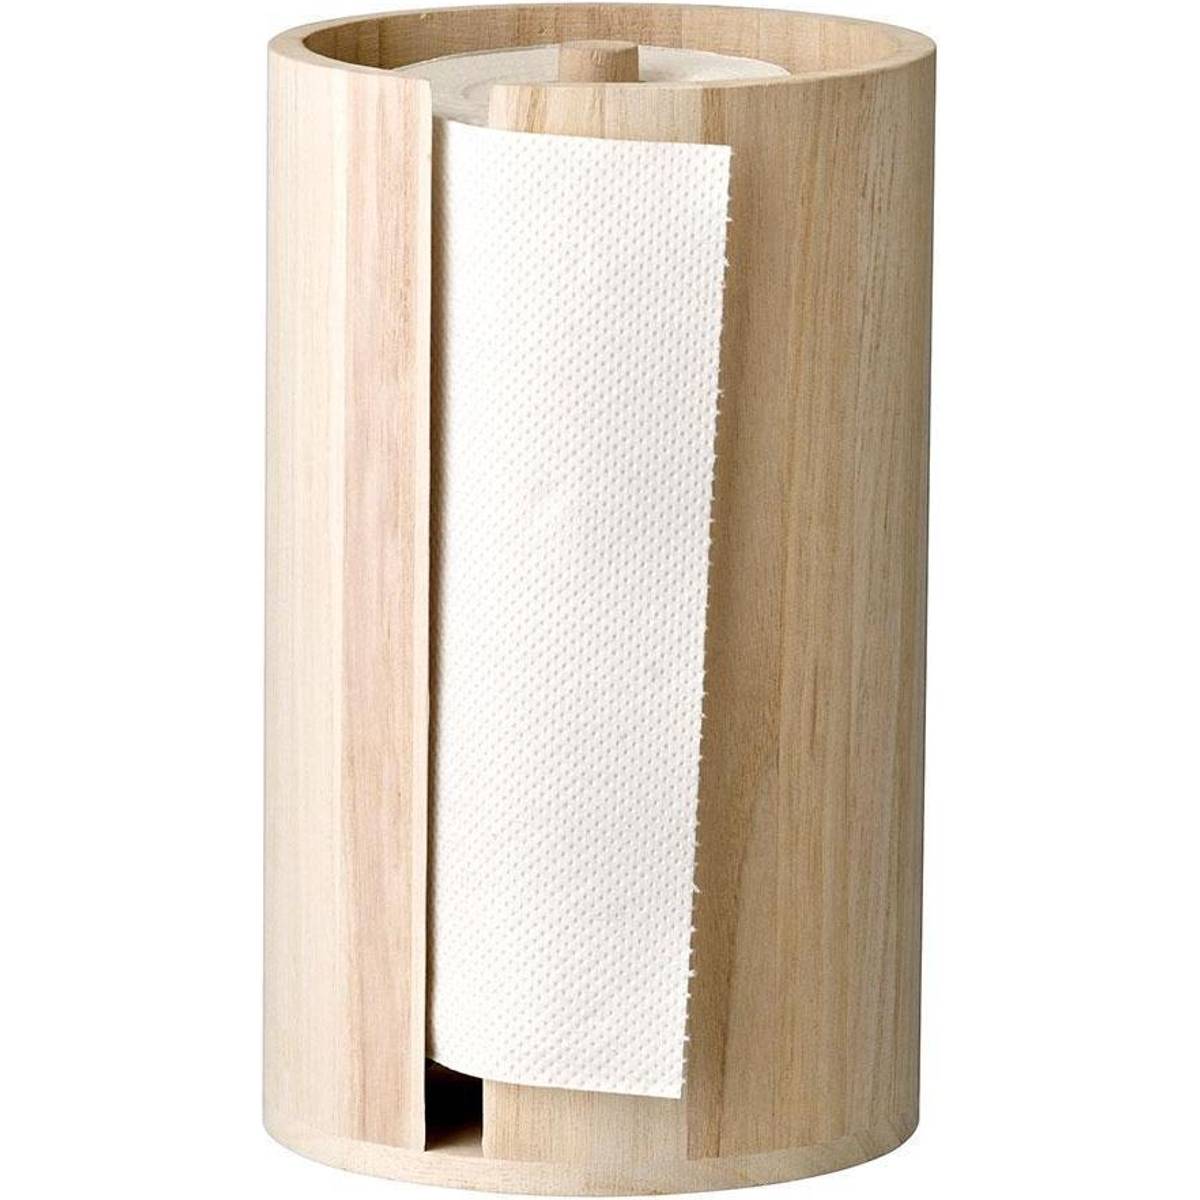 Hushållspappershållare - Trä (52 produkter) hos PriceRunner • Se ...